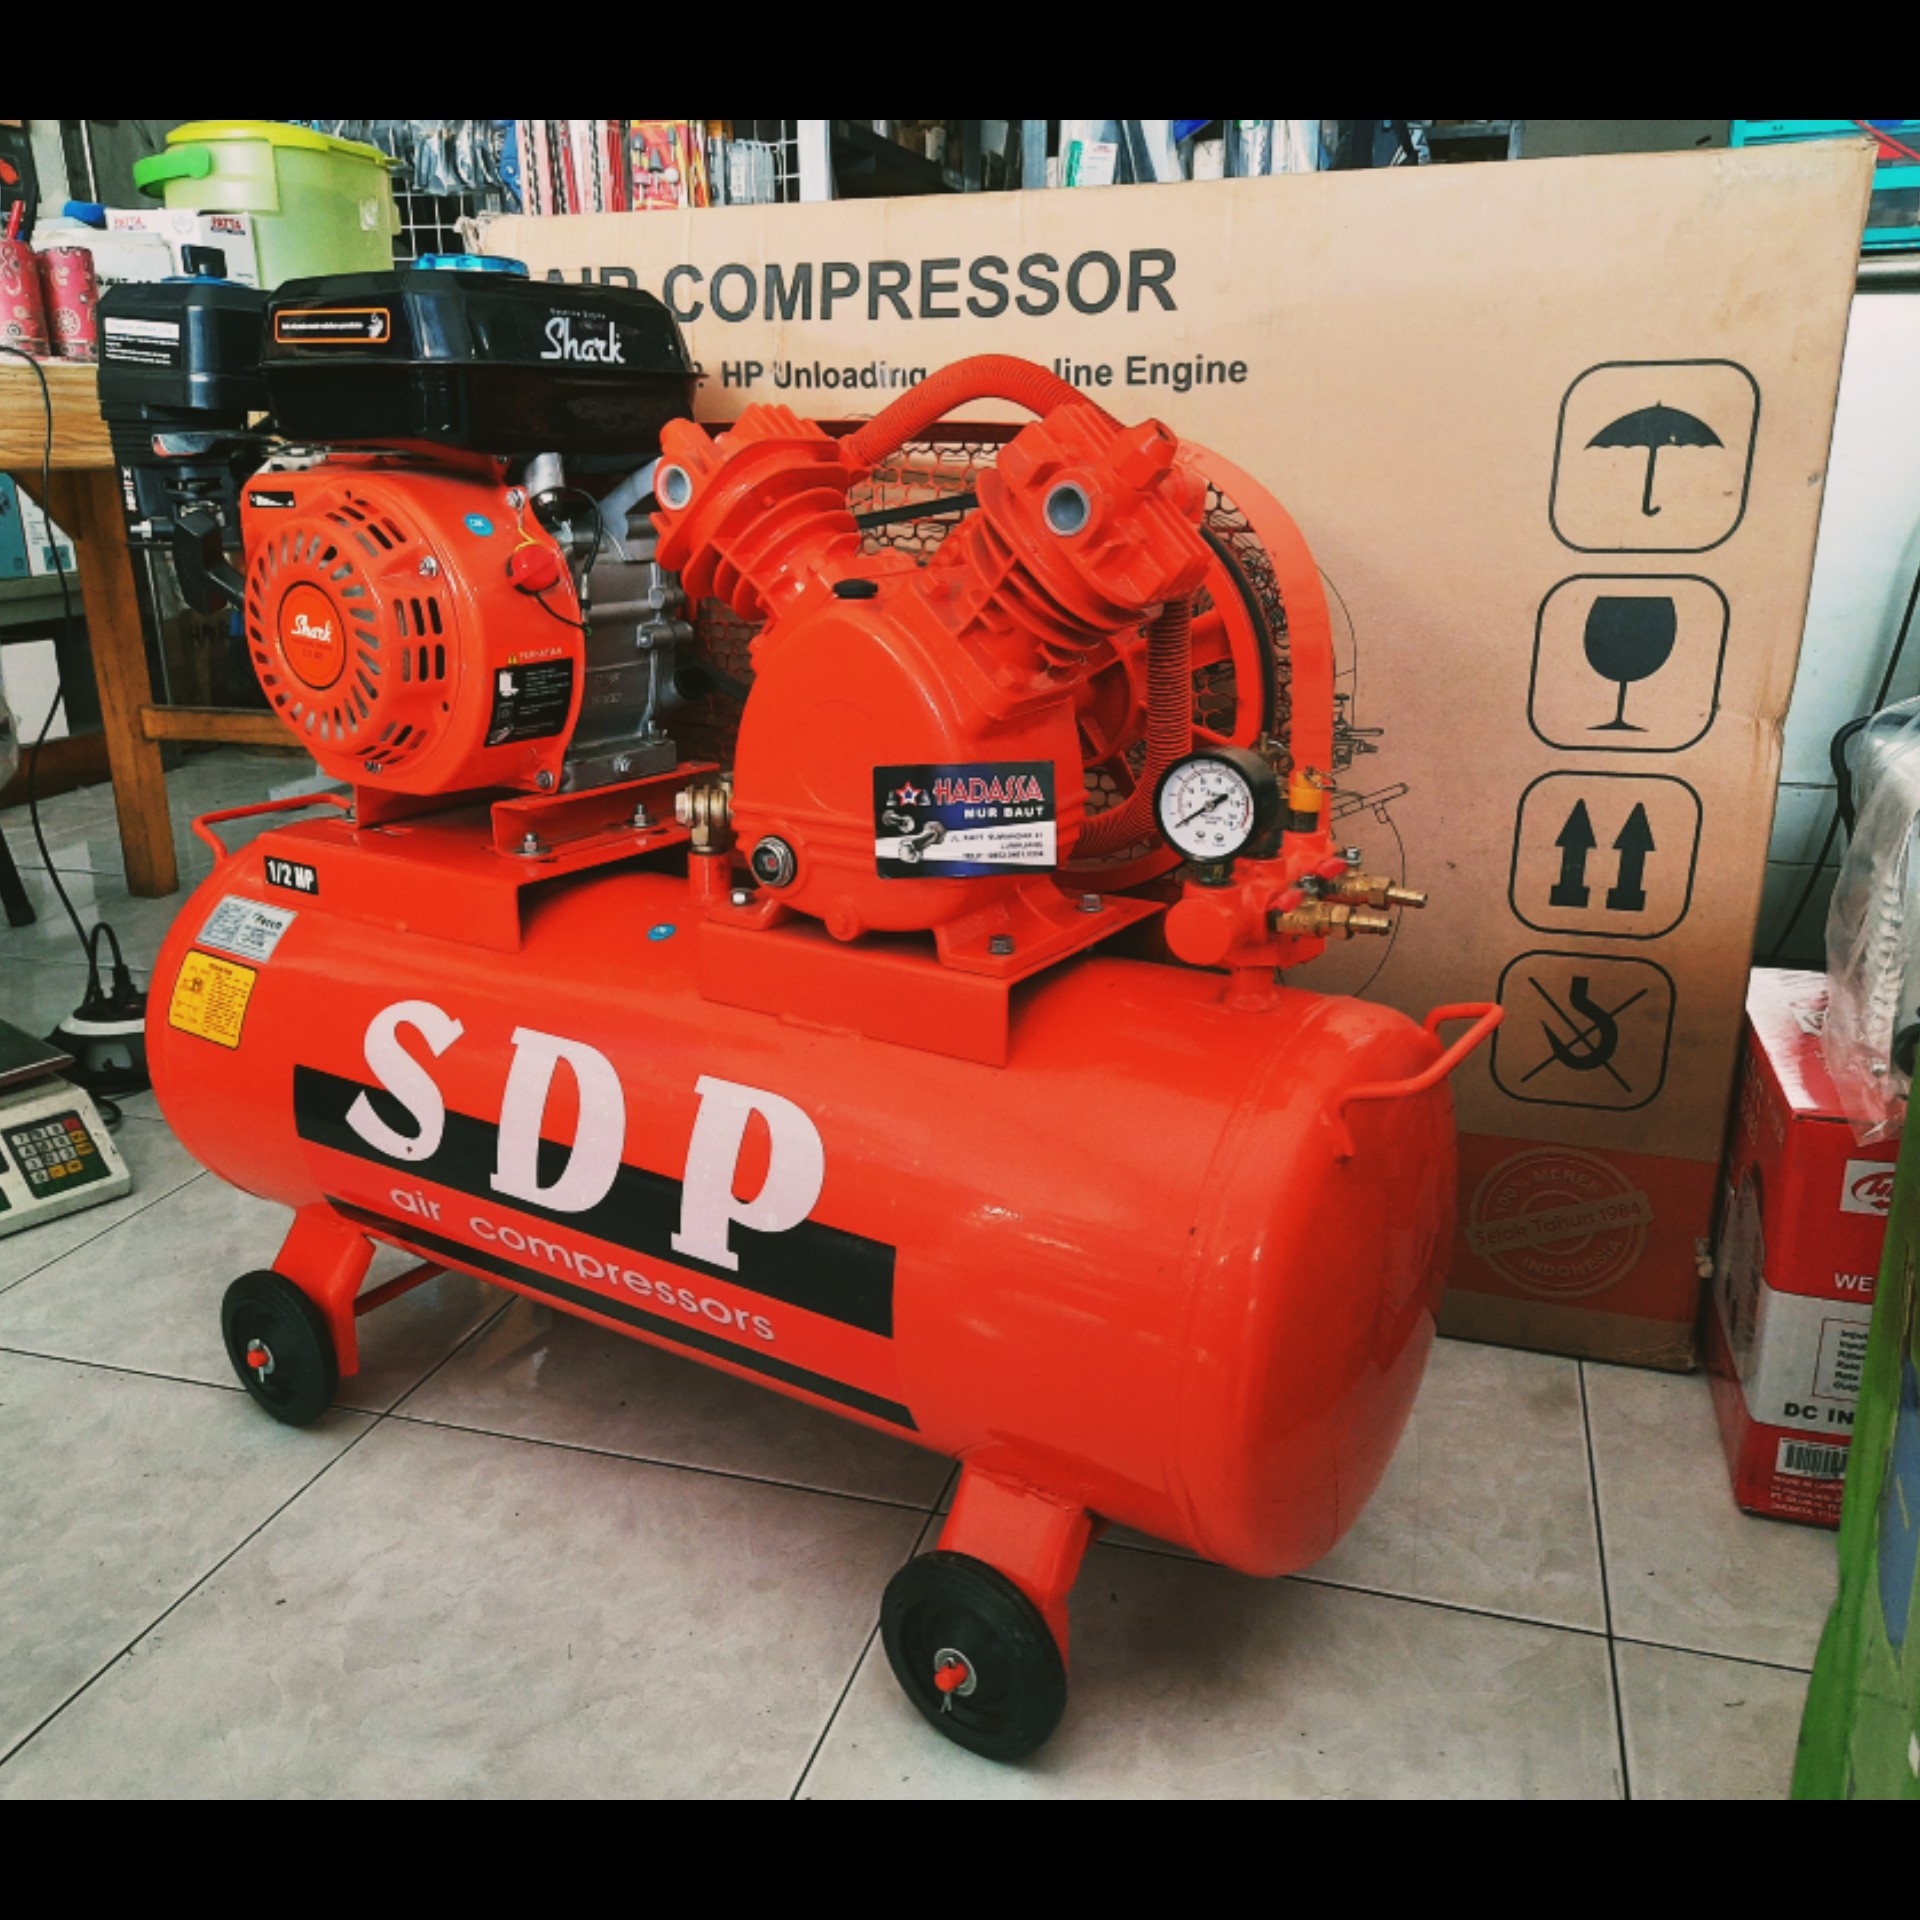 Air Compressor SDP MVUE-5112 3